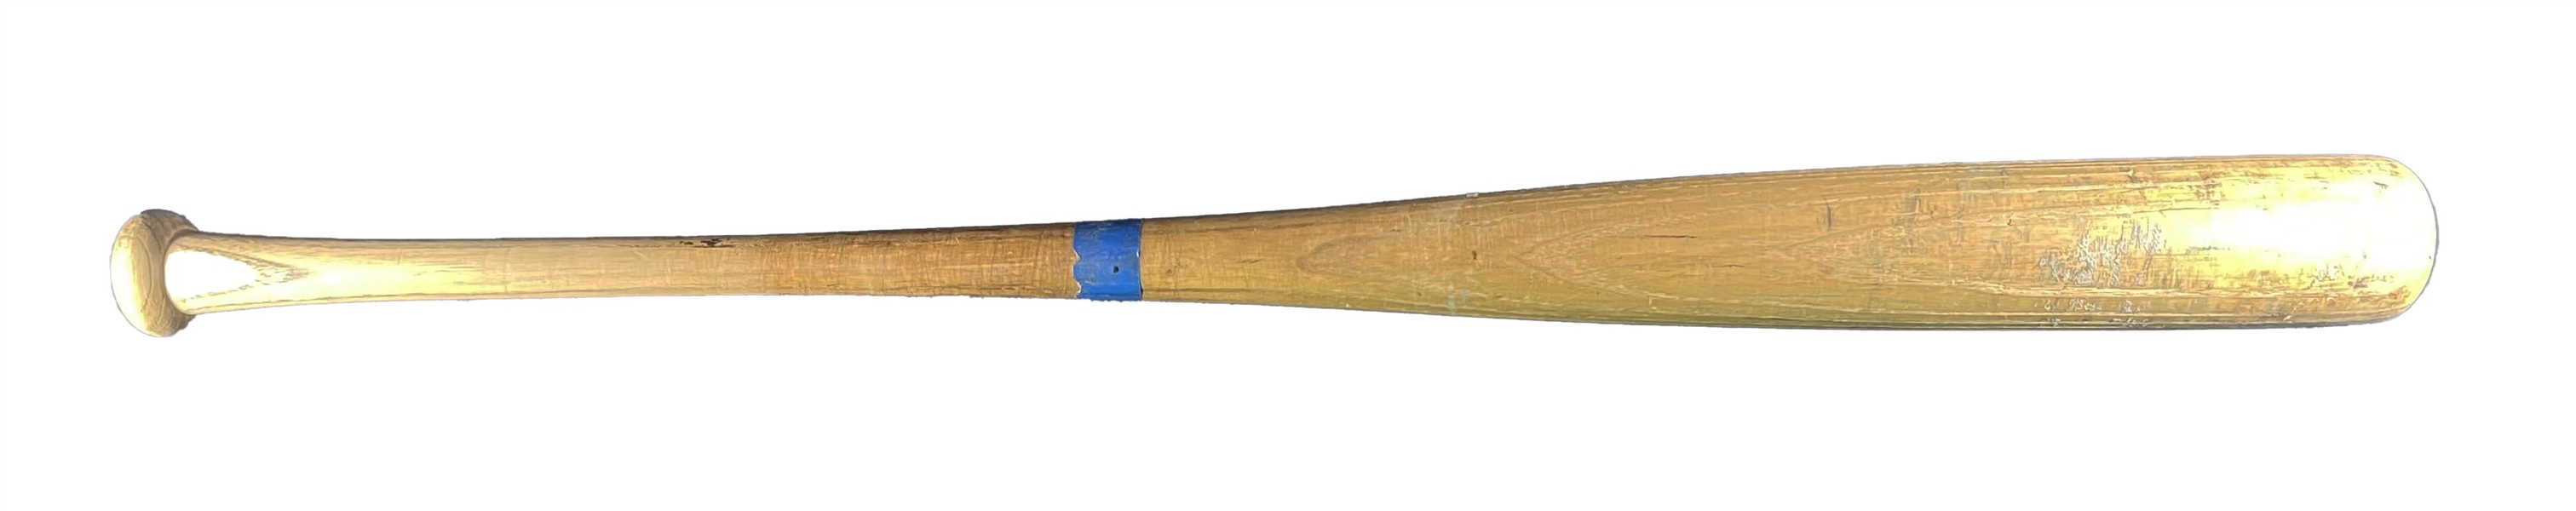 Steve Yeager Signed 1970's Louisville Slugger Game Used Baseball Bat